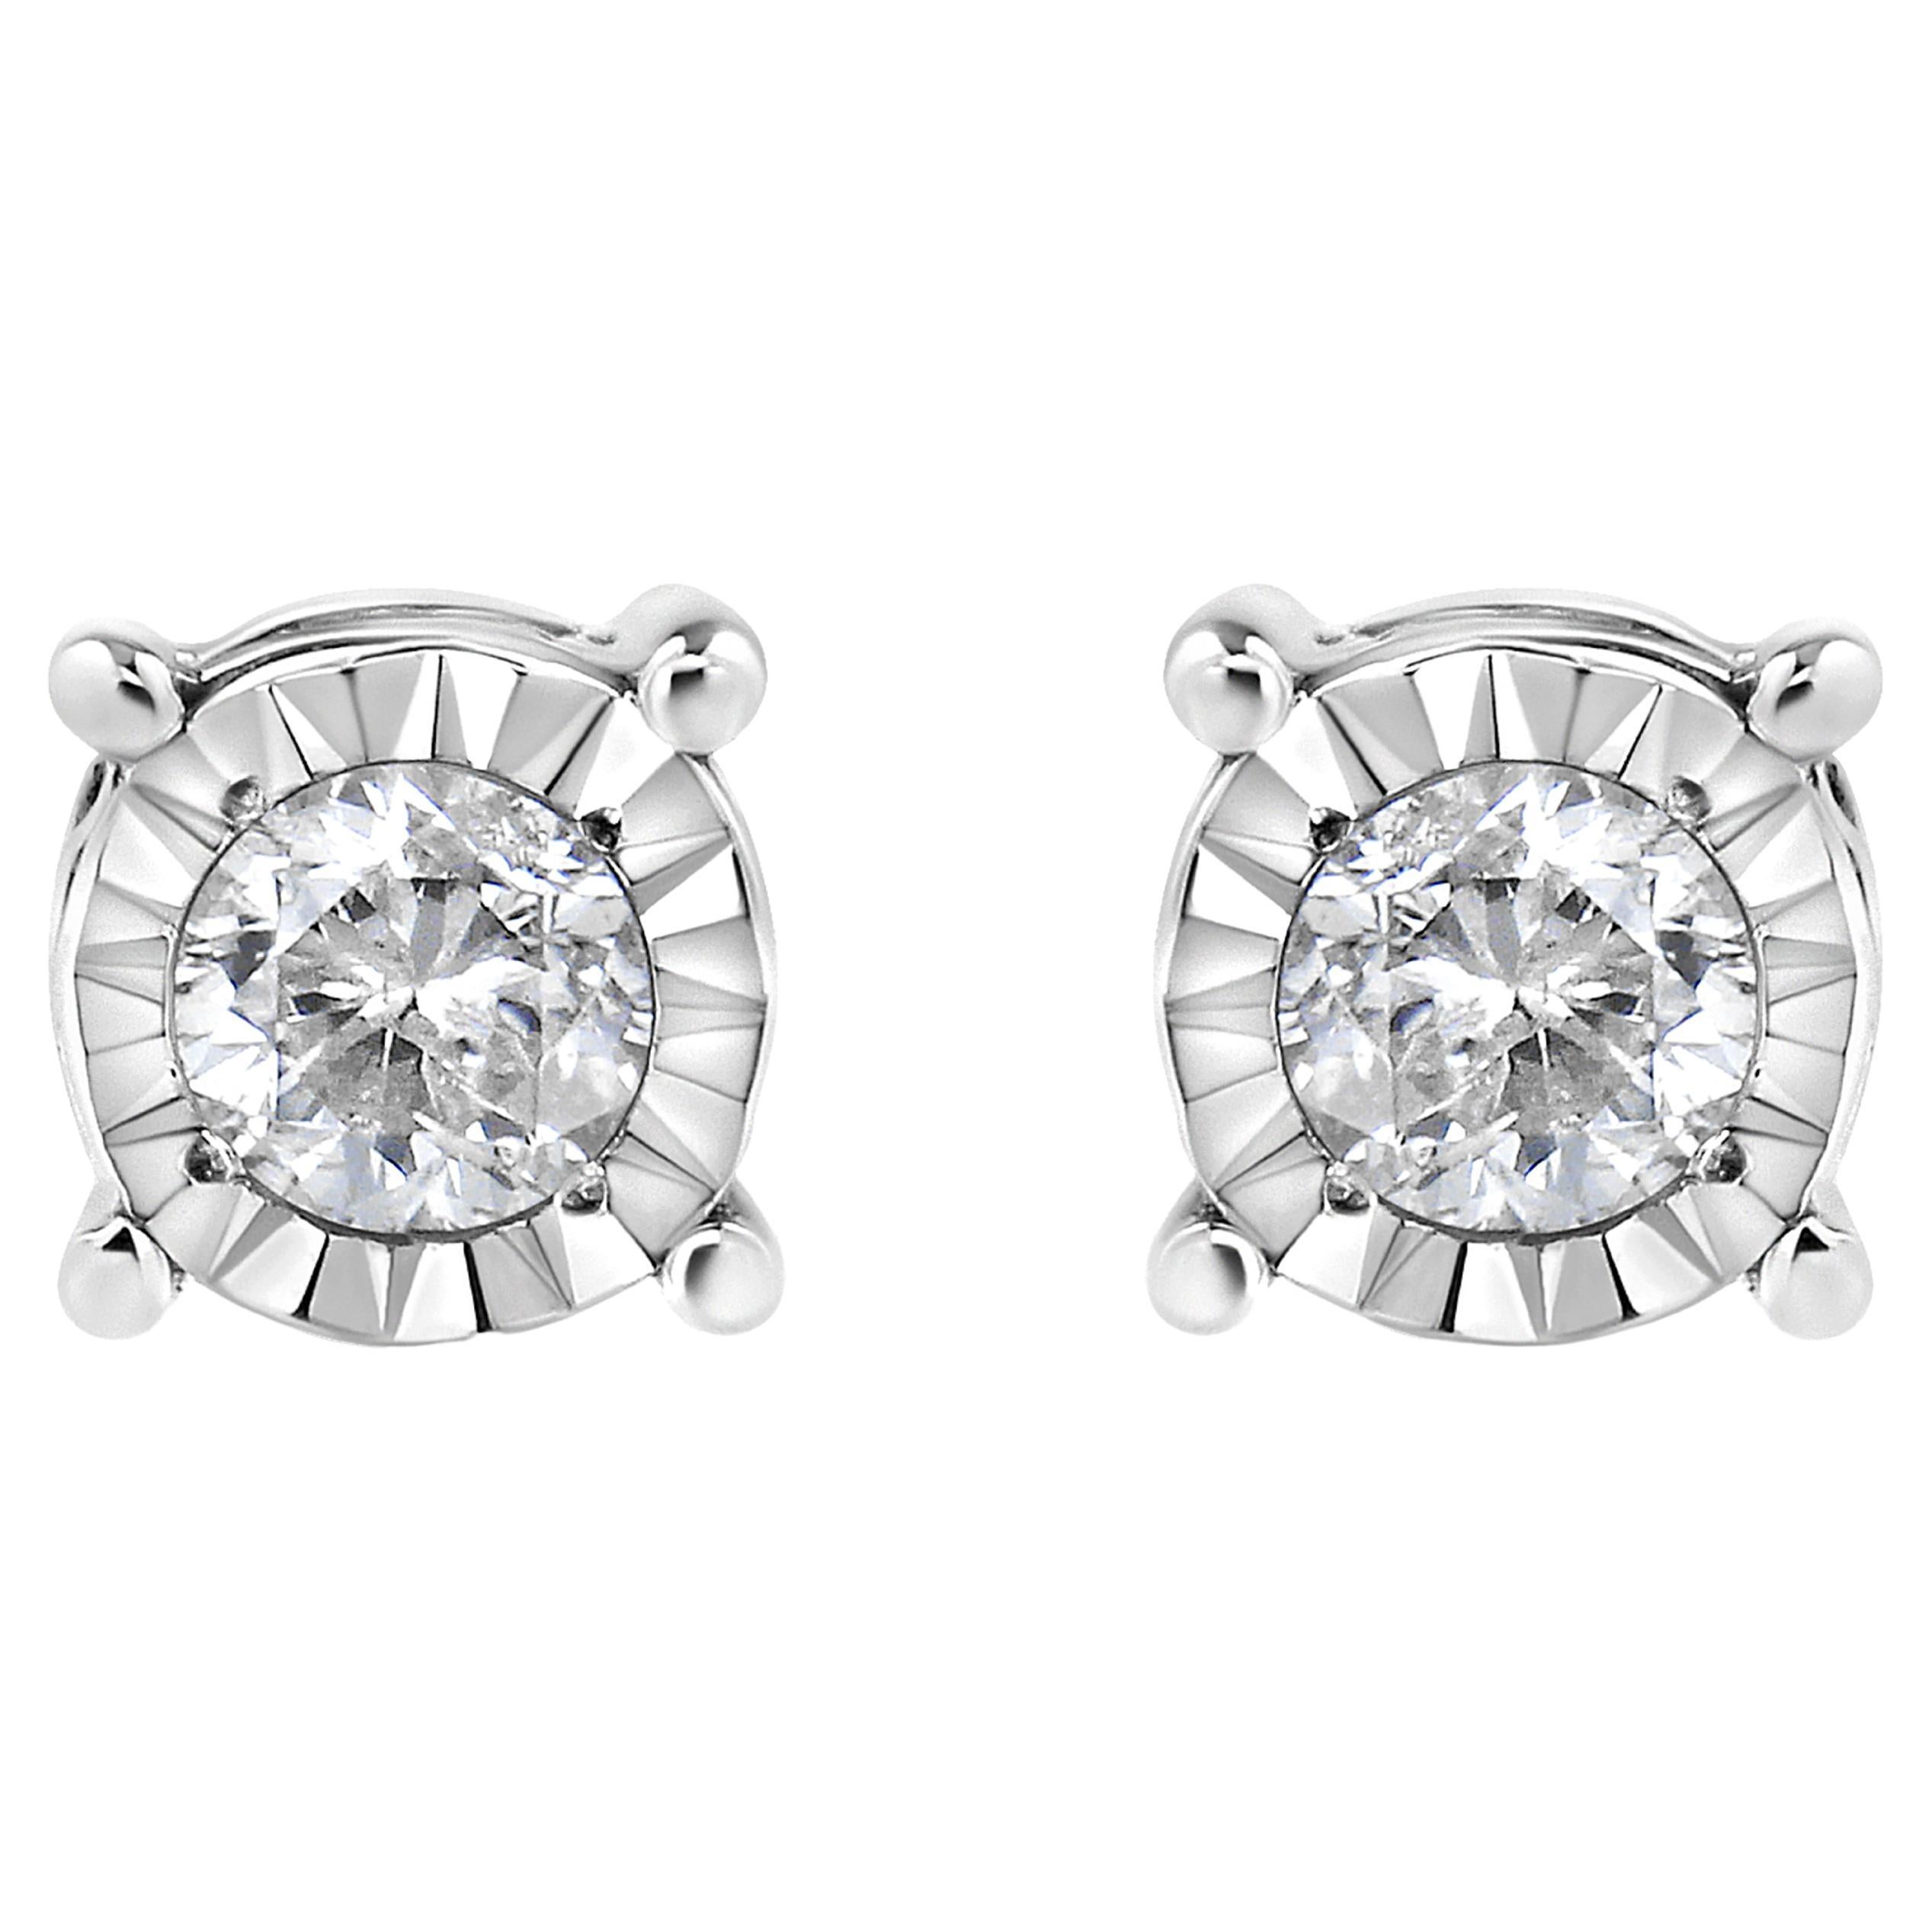 .925 Sterling Silver 1/5 Carat Round-Cut Diamond Stud Earrings